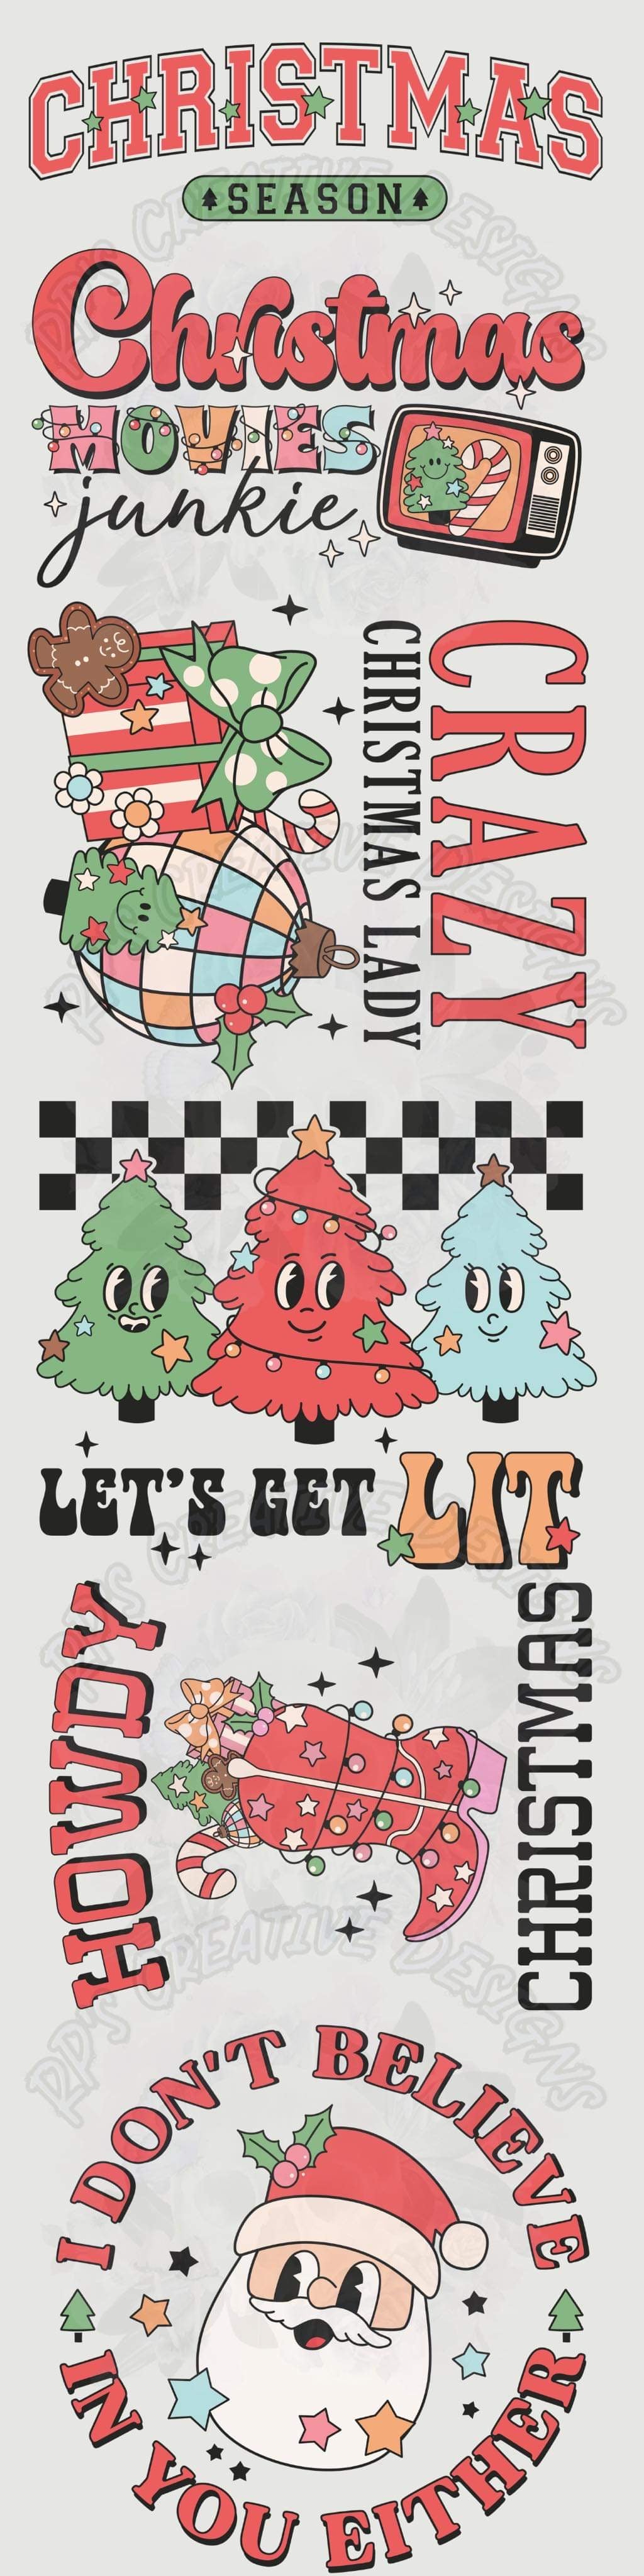 Retro Christmas Gang Sheet